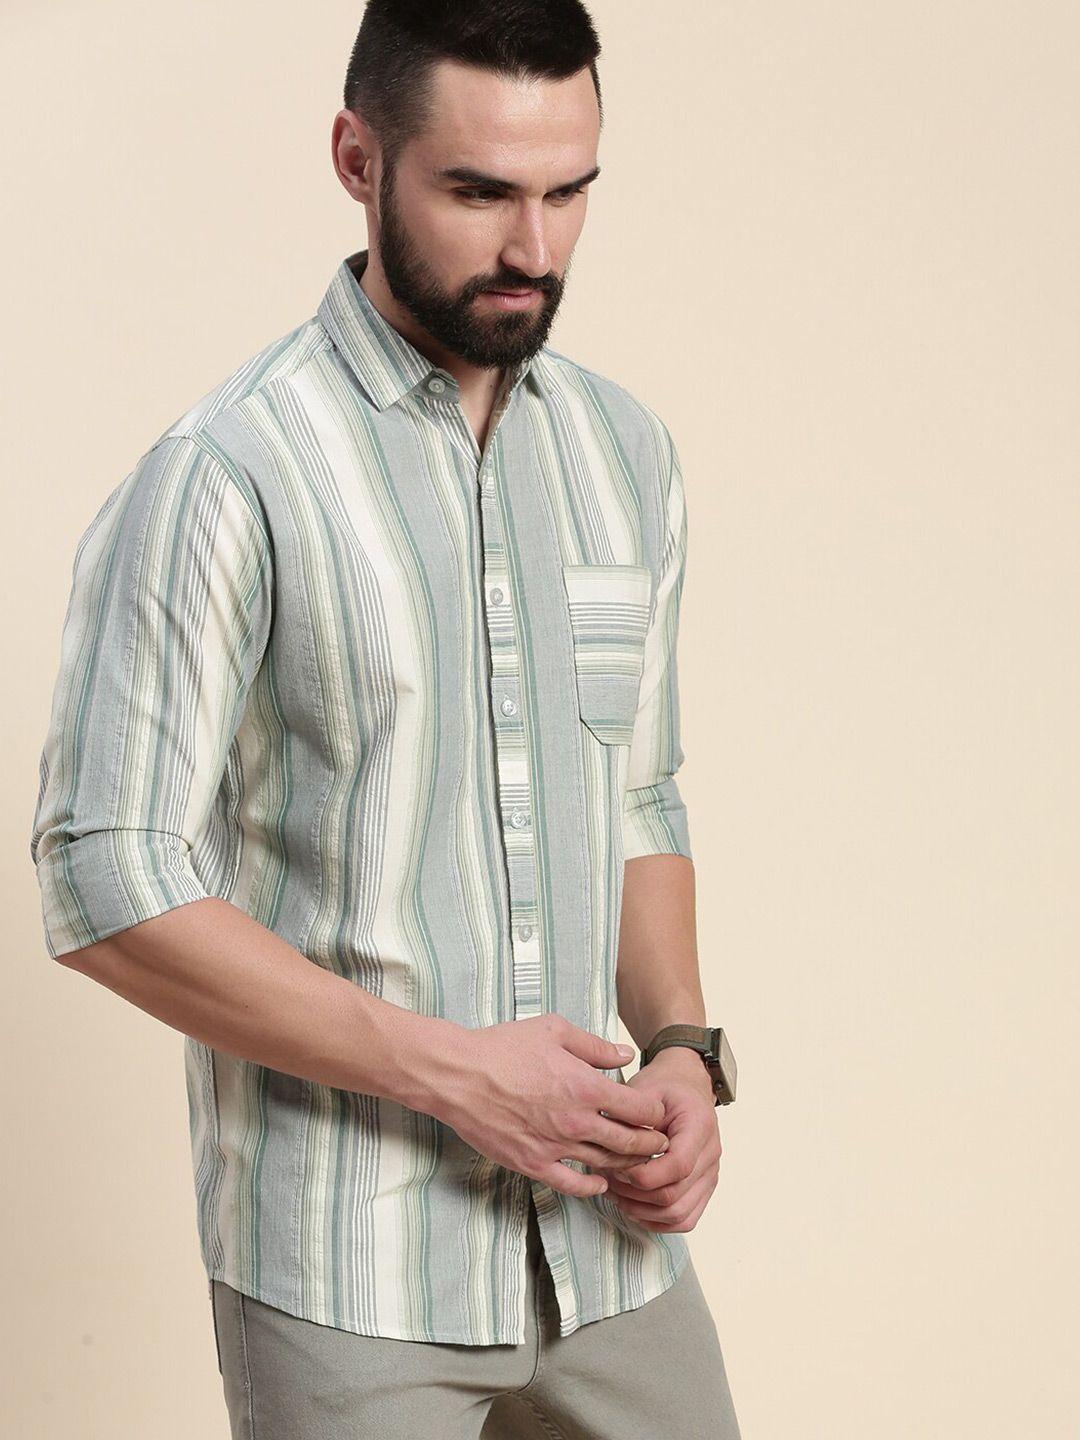 dillinger vertical striped spread collar pure cotton casual shirt